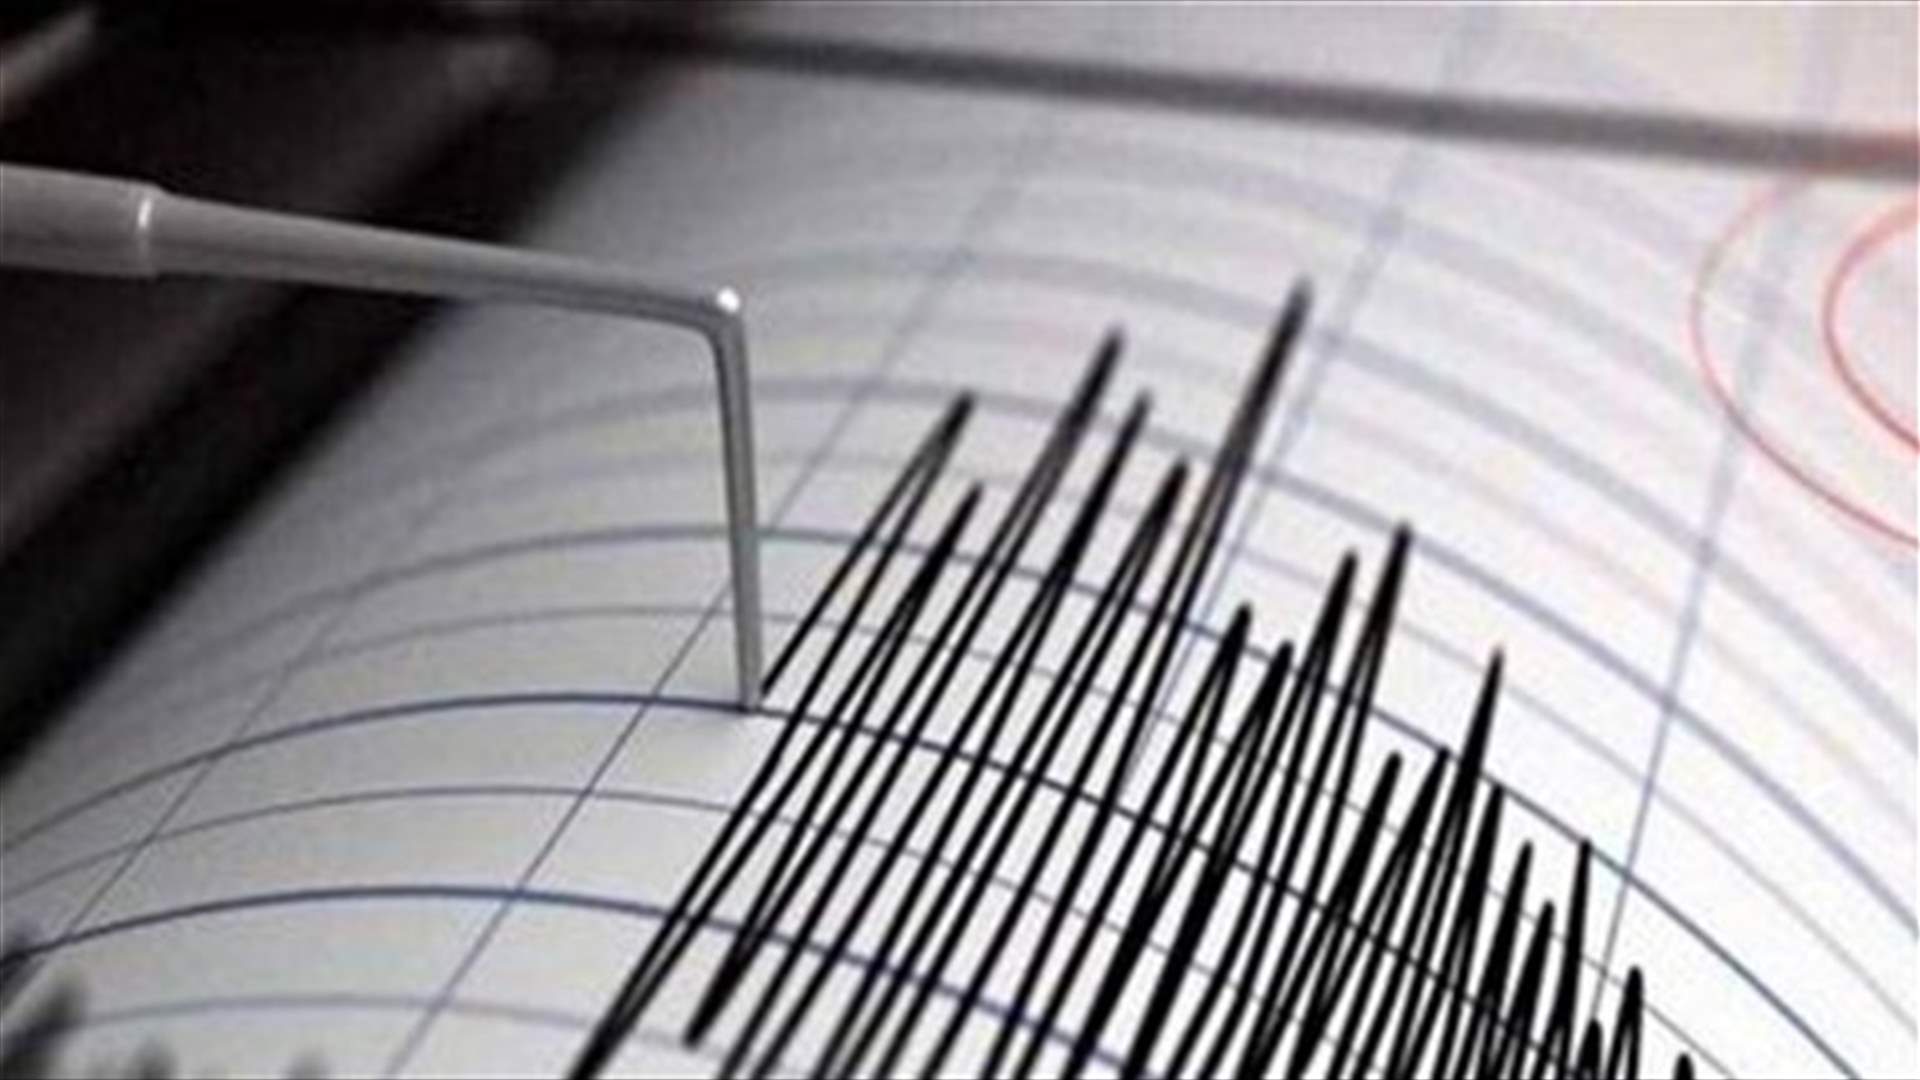 Quake hits northwest of Greek capital Athens - witnesses